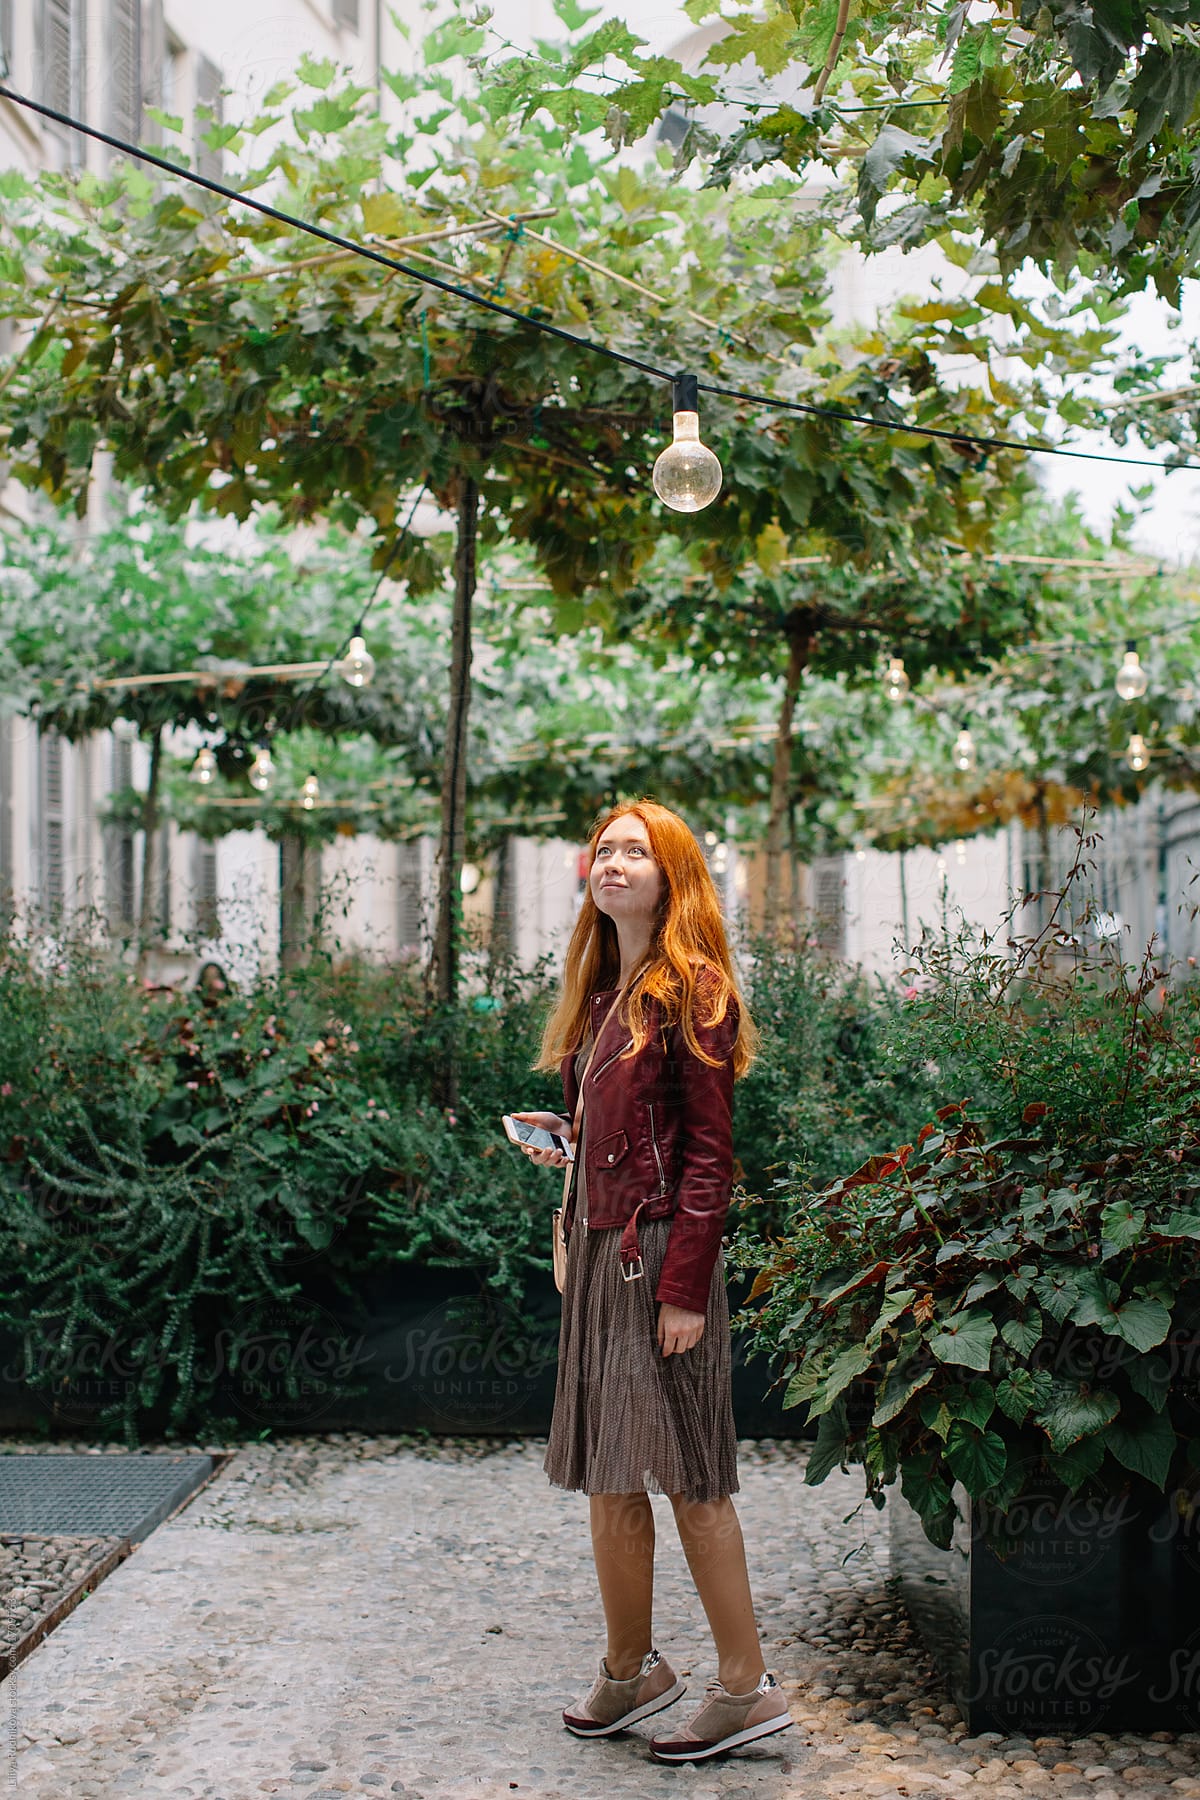 Dreamy portrait of stylish redhead girl in the garden